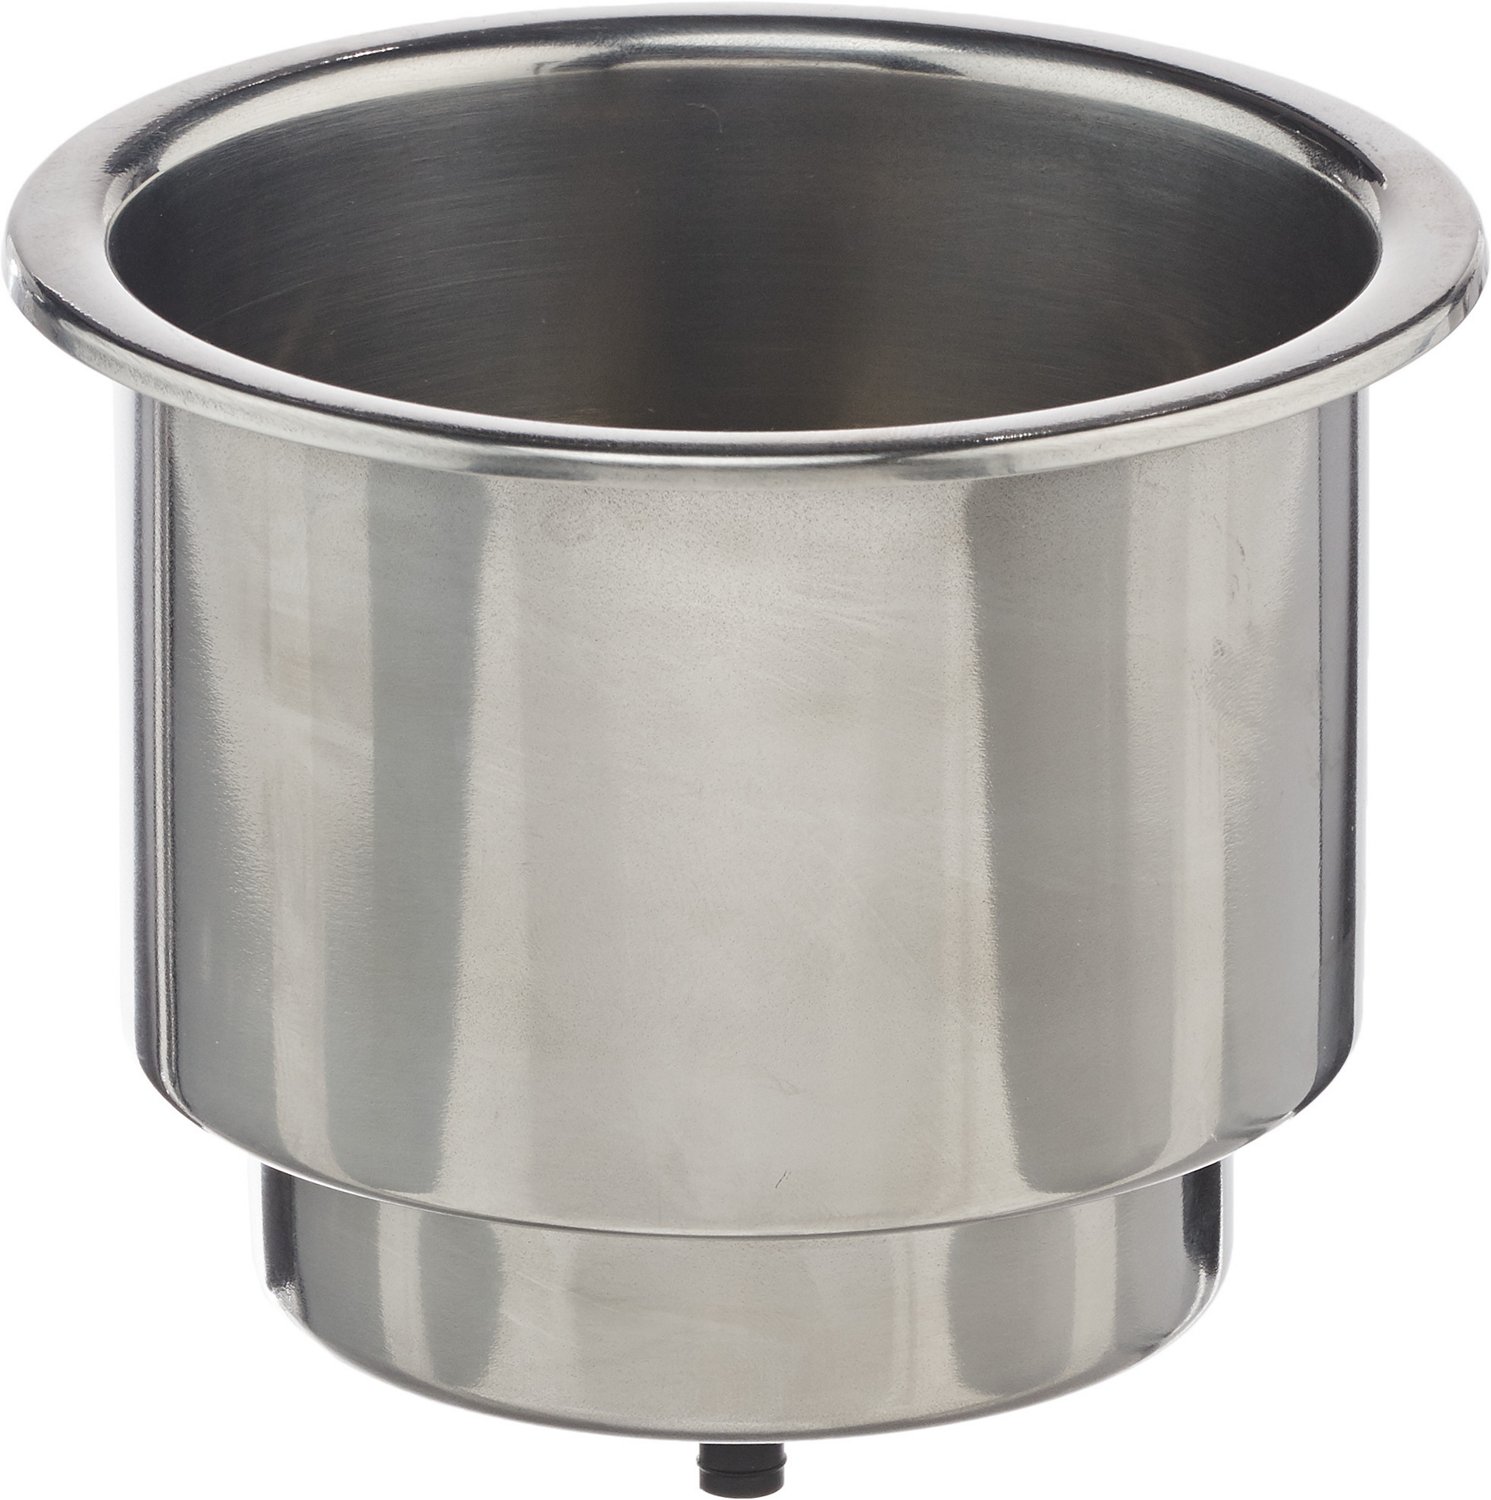 Stainless steel cupholder deluxe, Single - Titan Marine